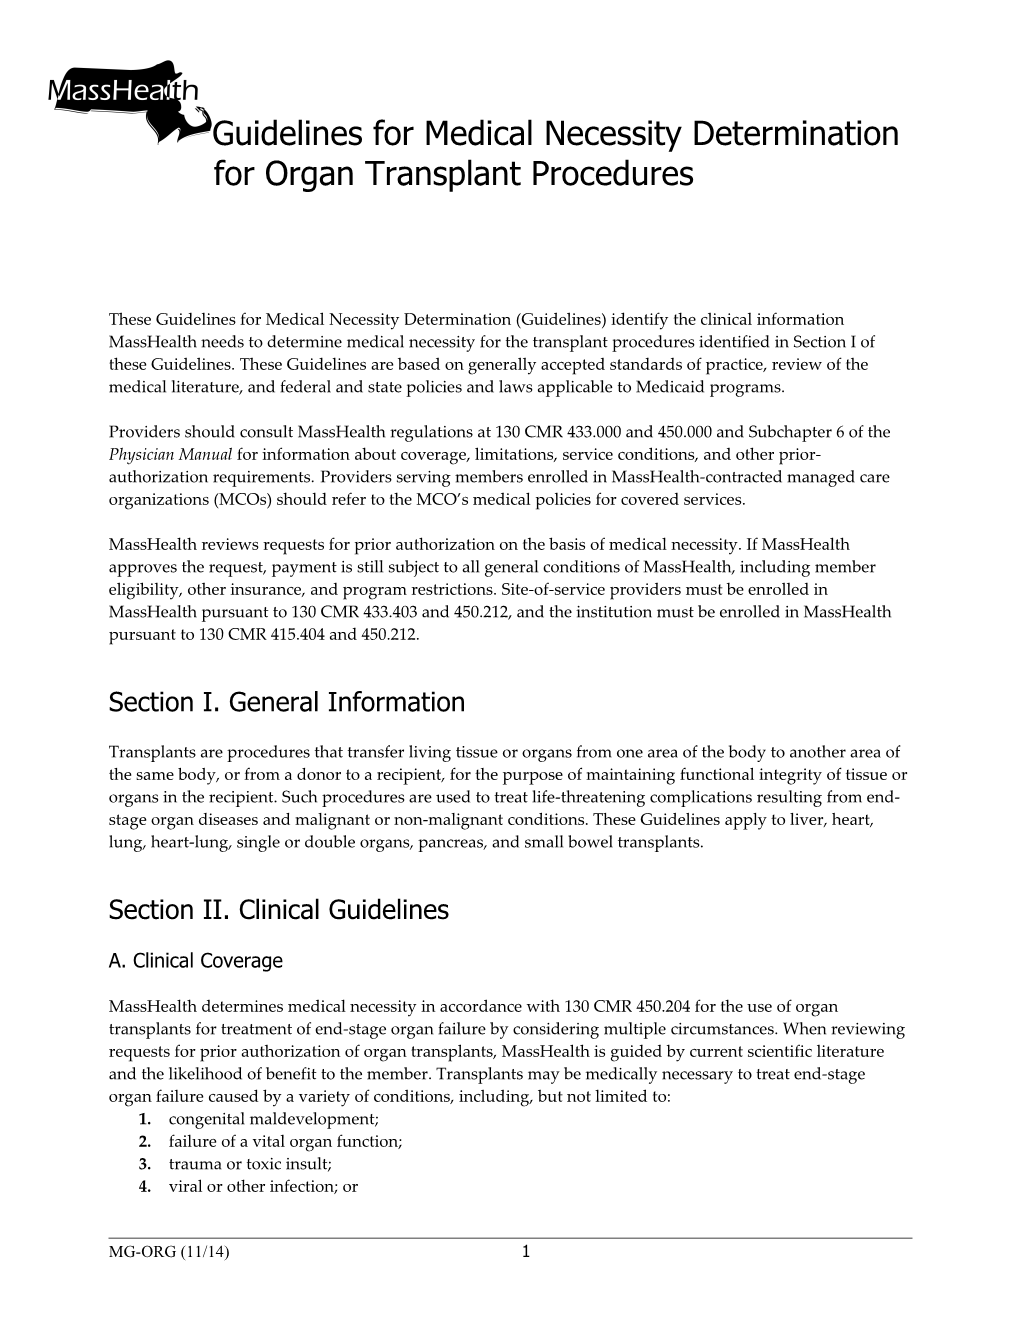 Guidelines for Medical Necessity Determination for Organ Transplant Procedures